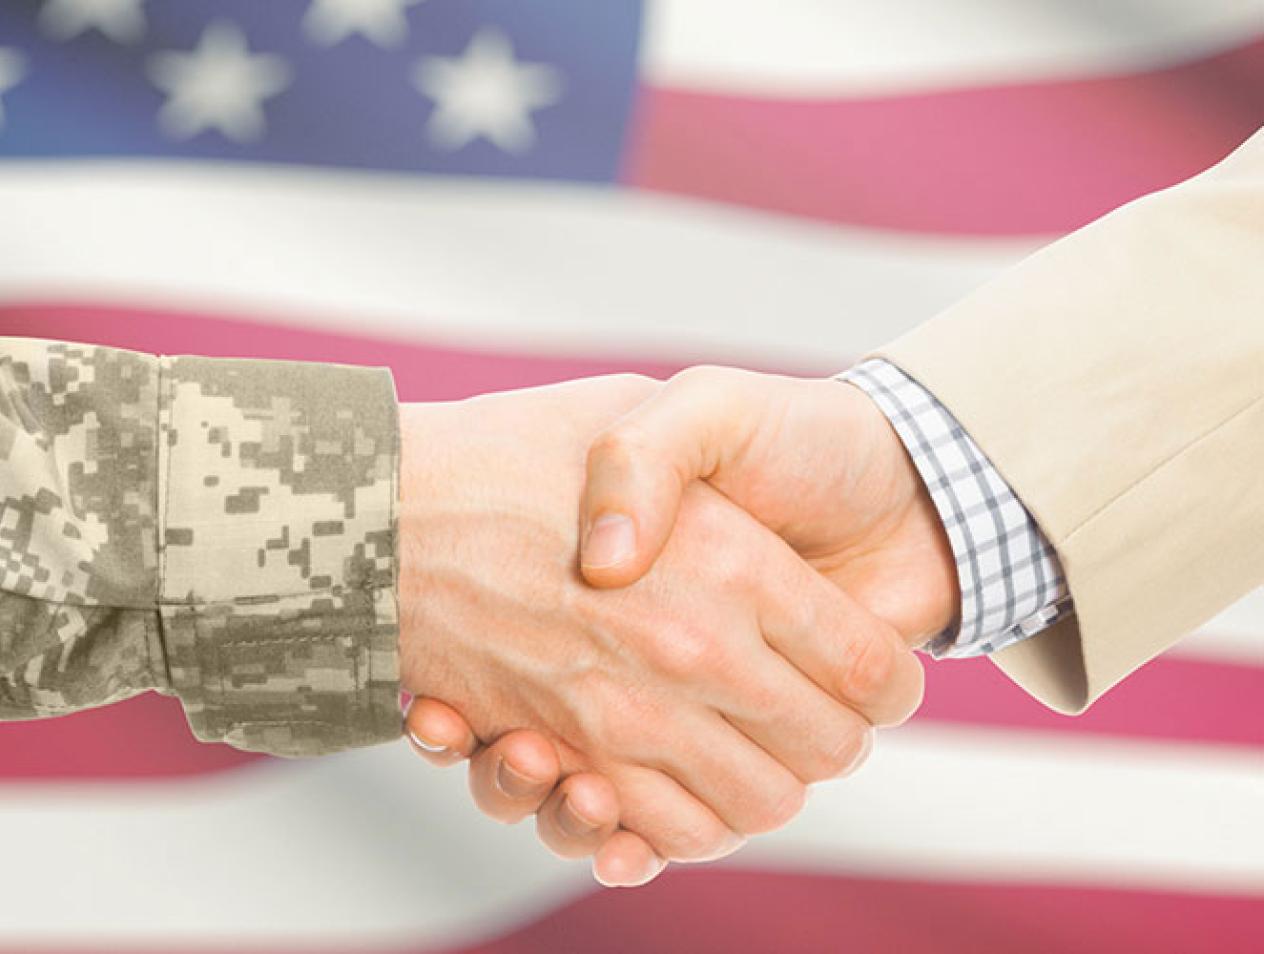 Handshake between uniformed person and person in civilian dress